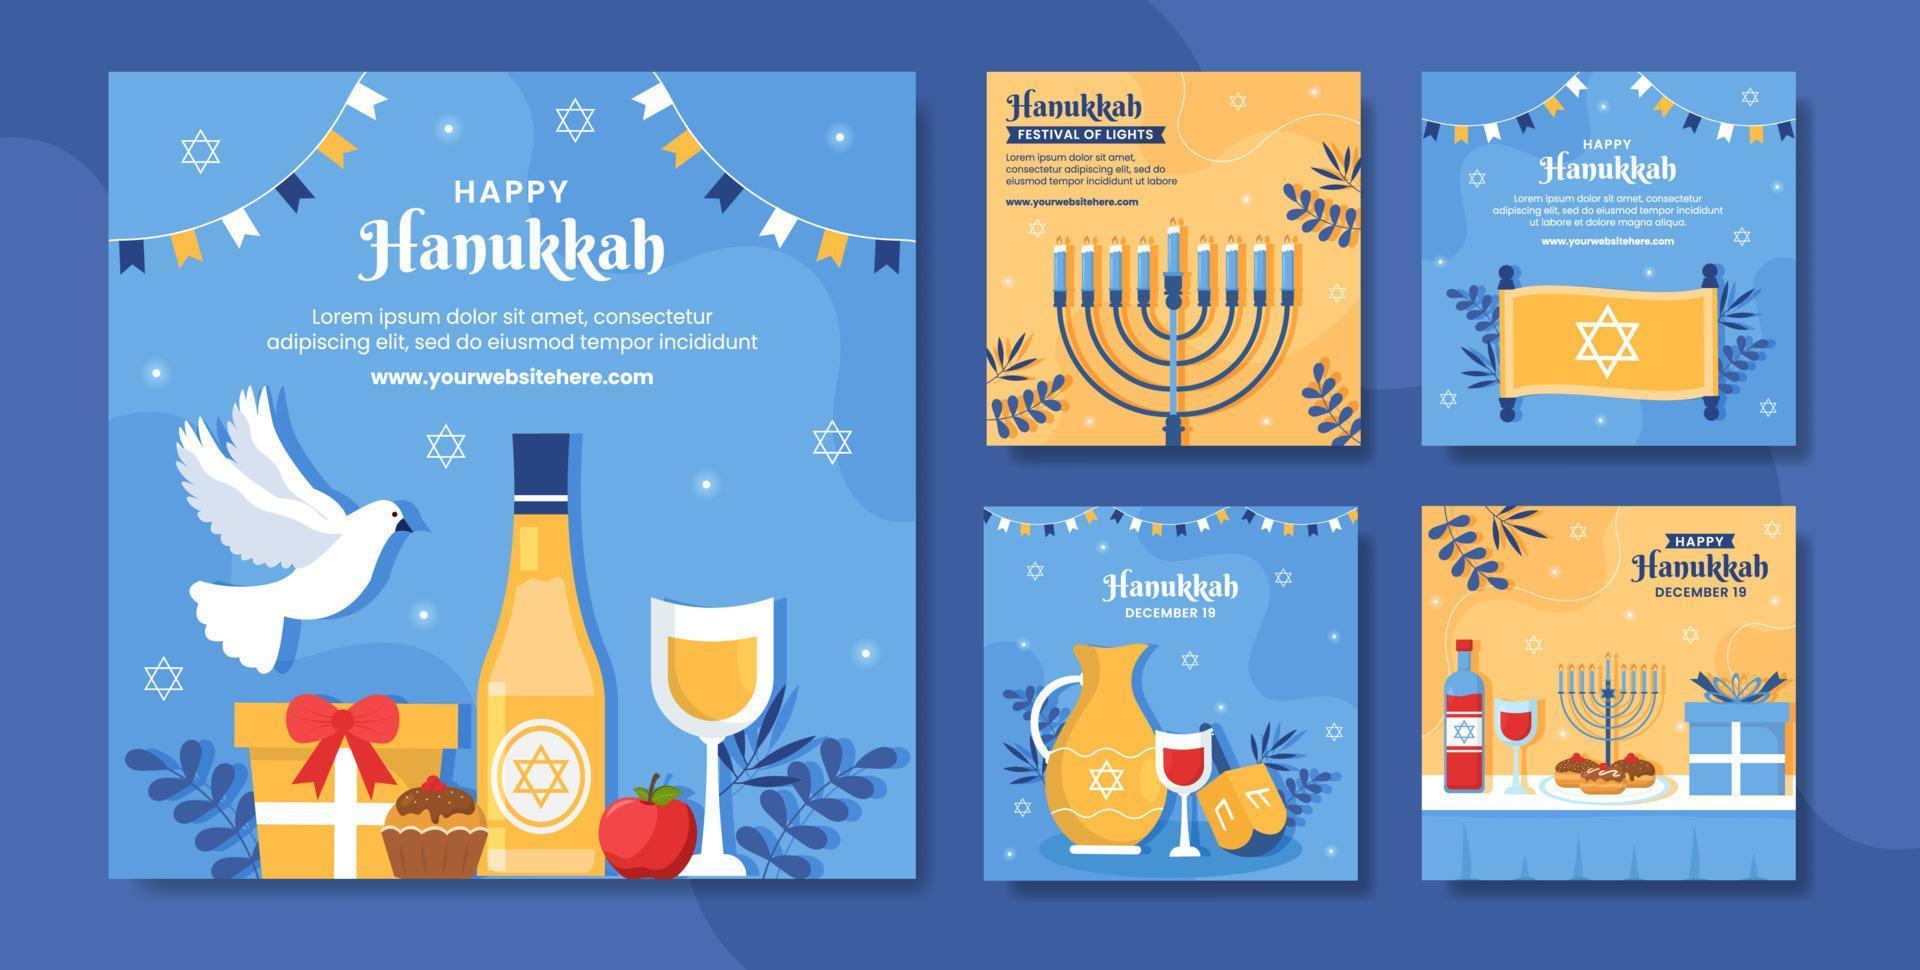 Hanukkah Jewish Holiday Social Media Post Flat Cartoon Hand Drawn Templates Illustration vector